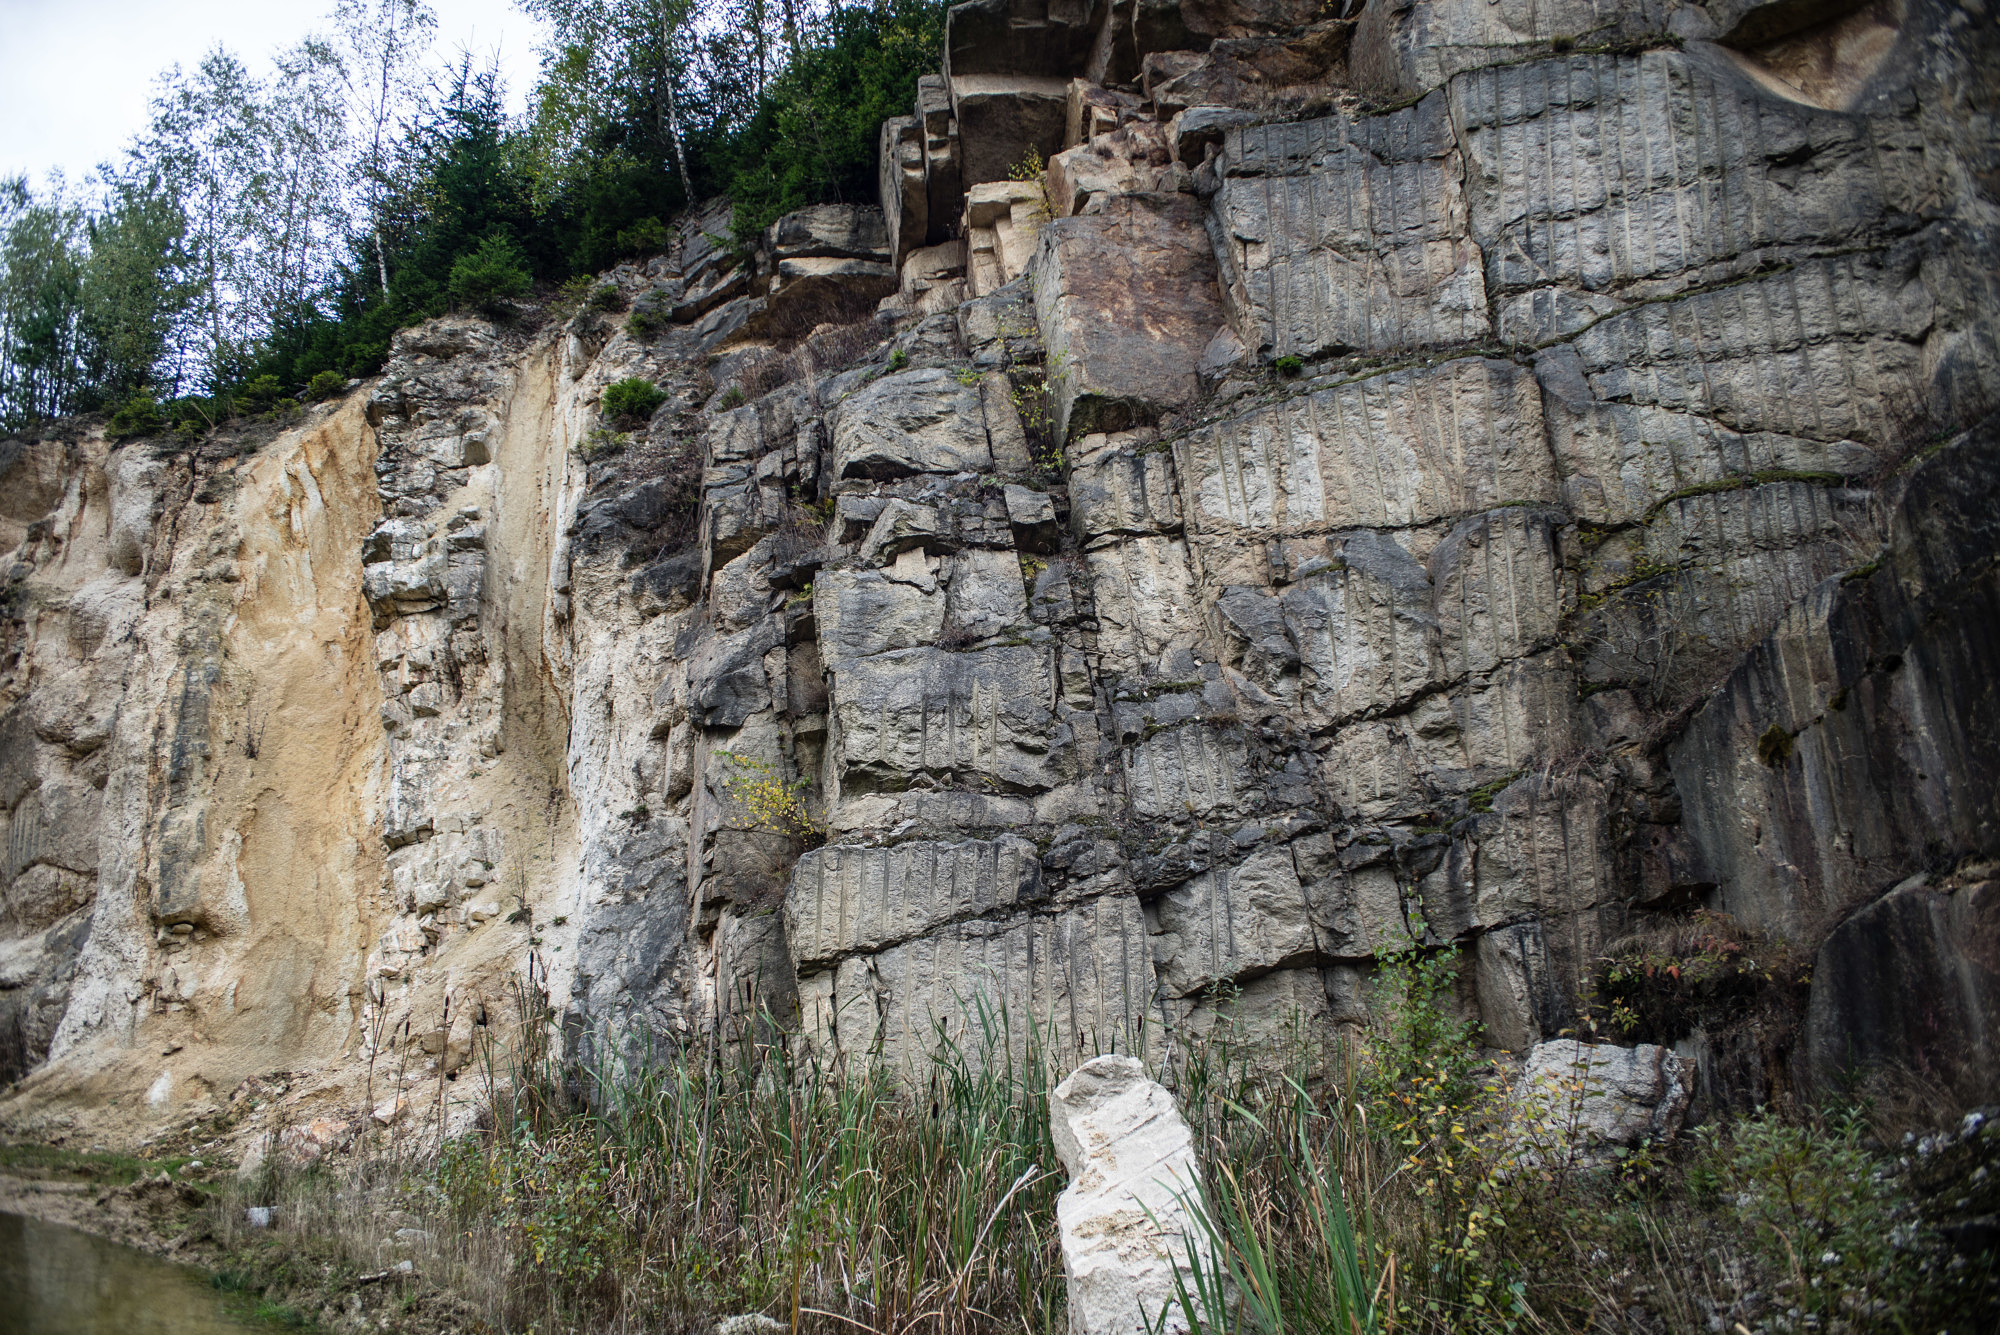 Fichtelgebirge: fault zone in granite (Photo: Wolfgang Bauer)